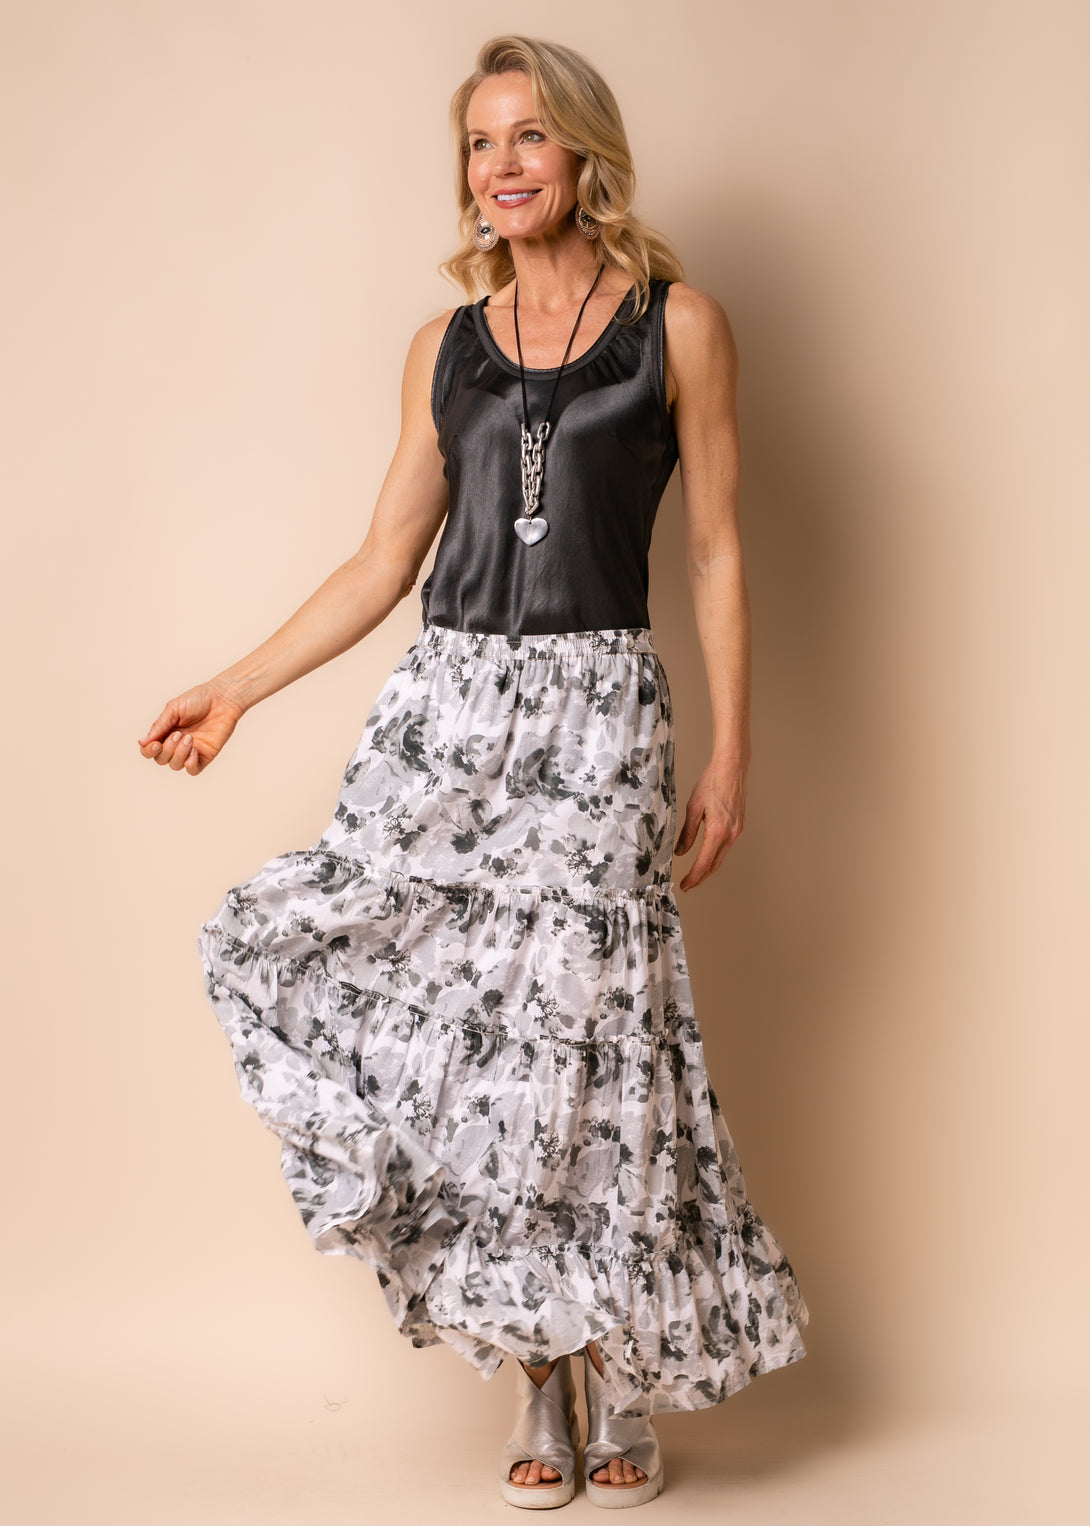 Berlin Cotton Skirt in Granite - Imagine Fashion